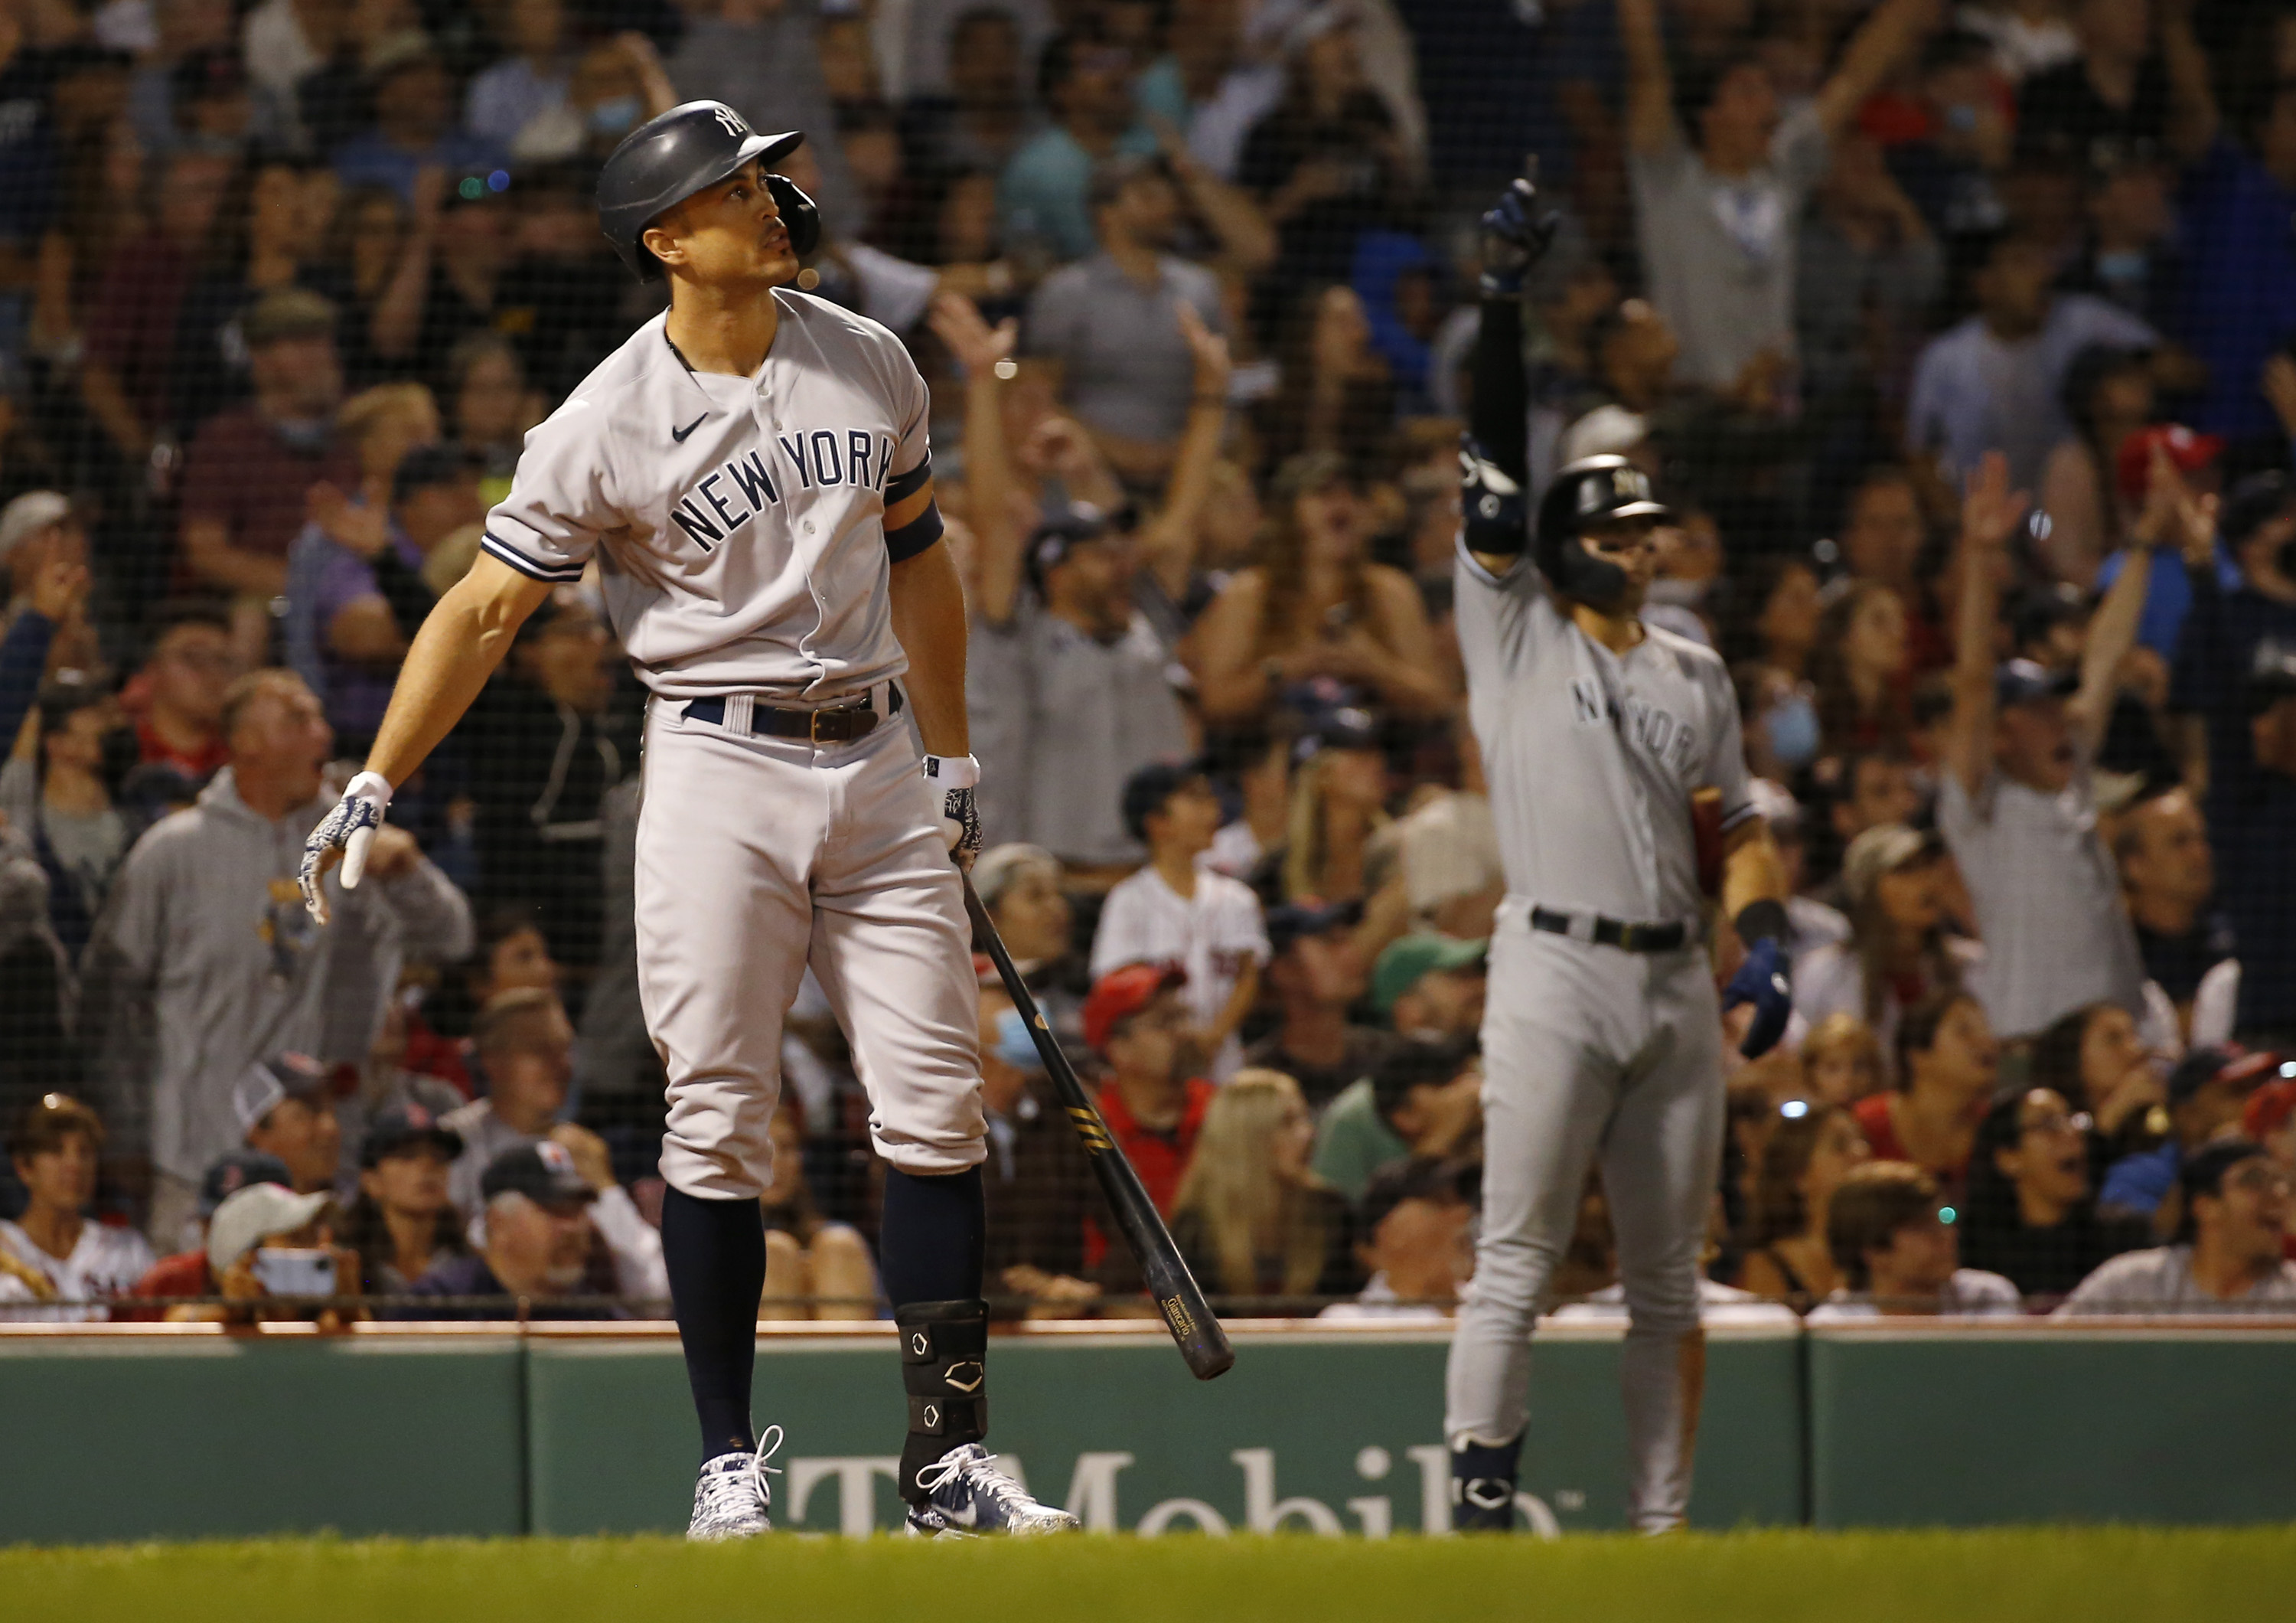 After wait, Yankees slam door - The Boston Globe